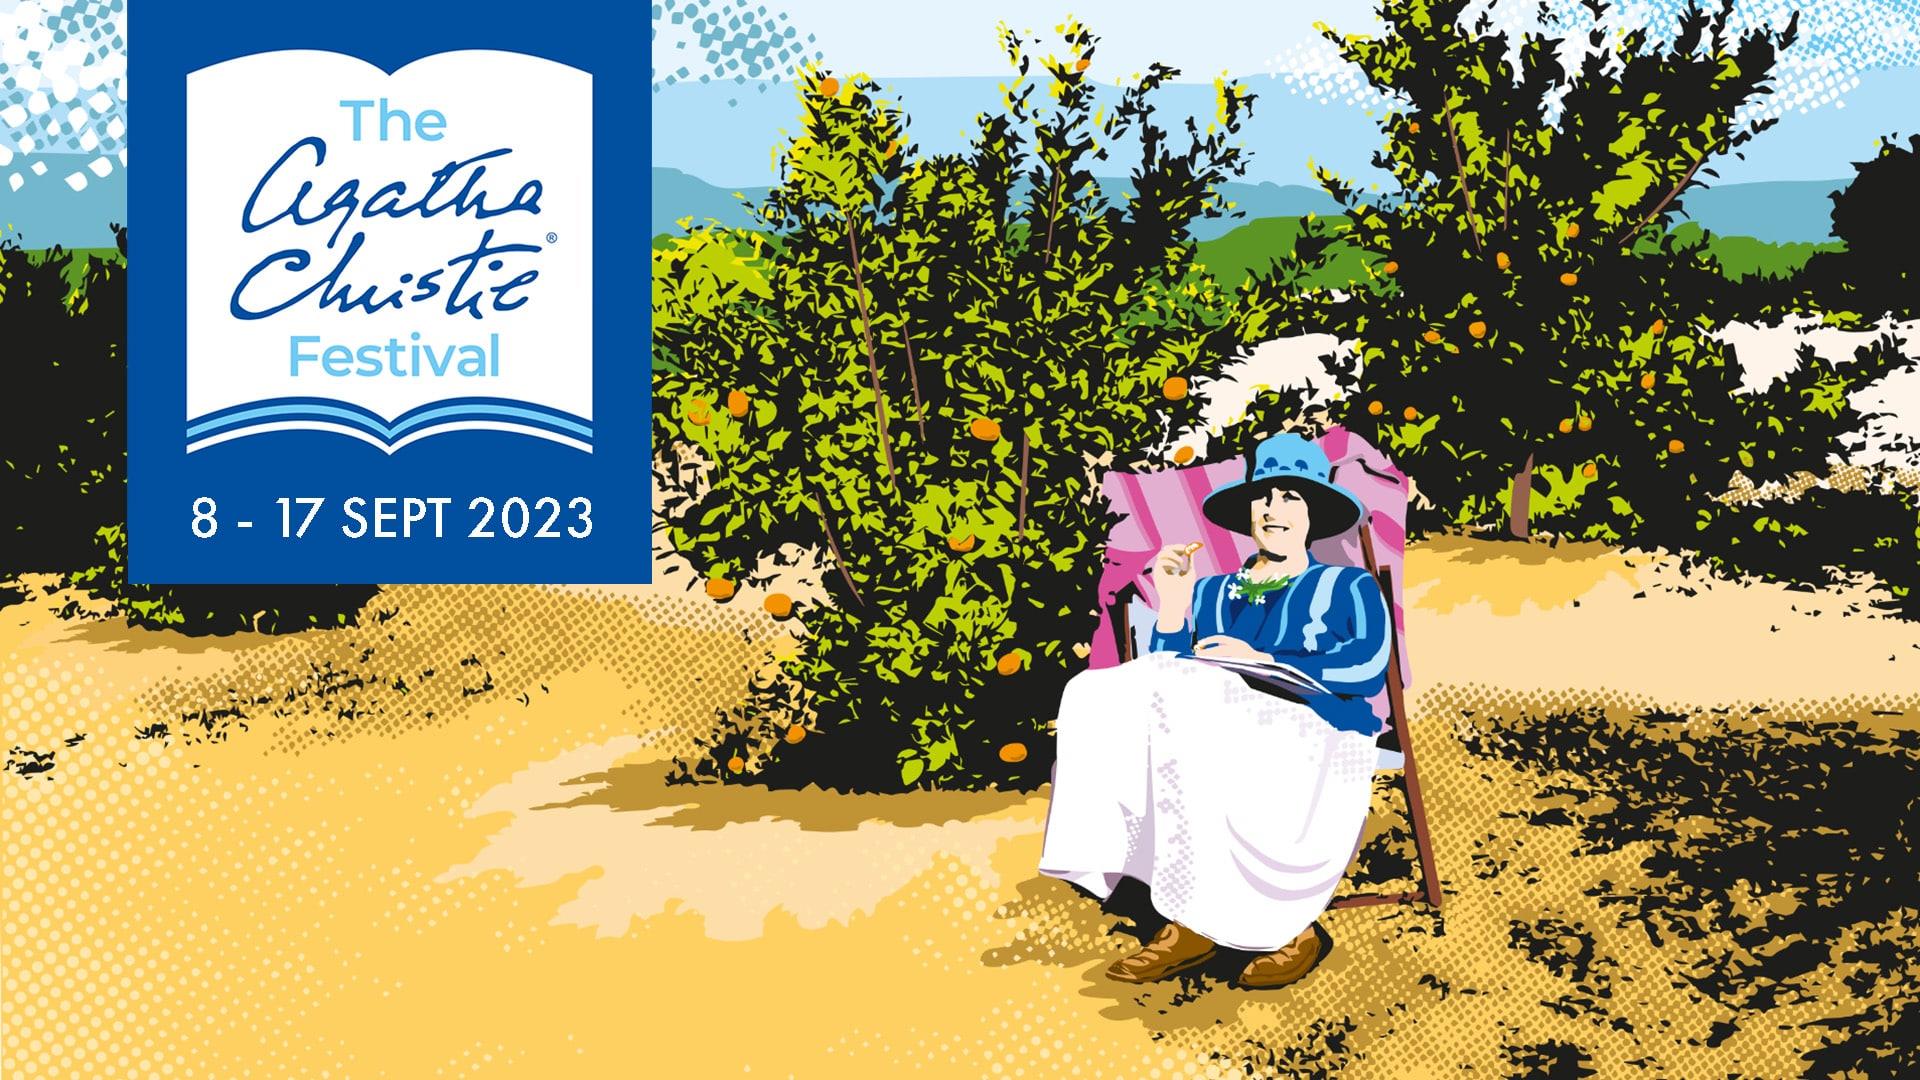 Agatha Christie Festival English Riviera Torquay, Paignton & Brixham